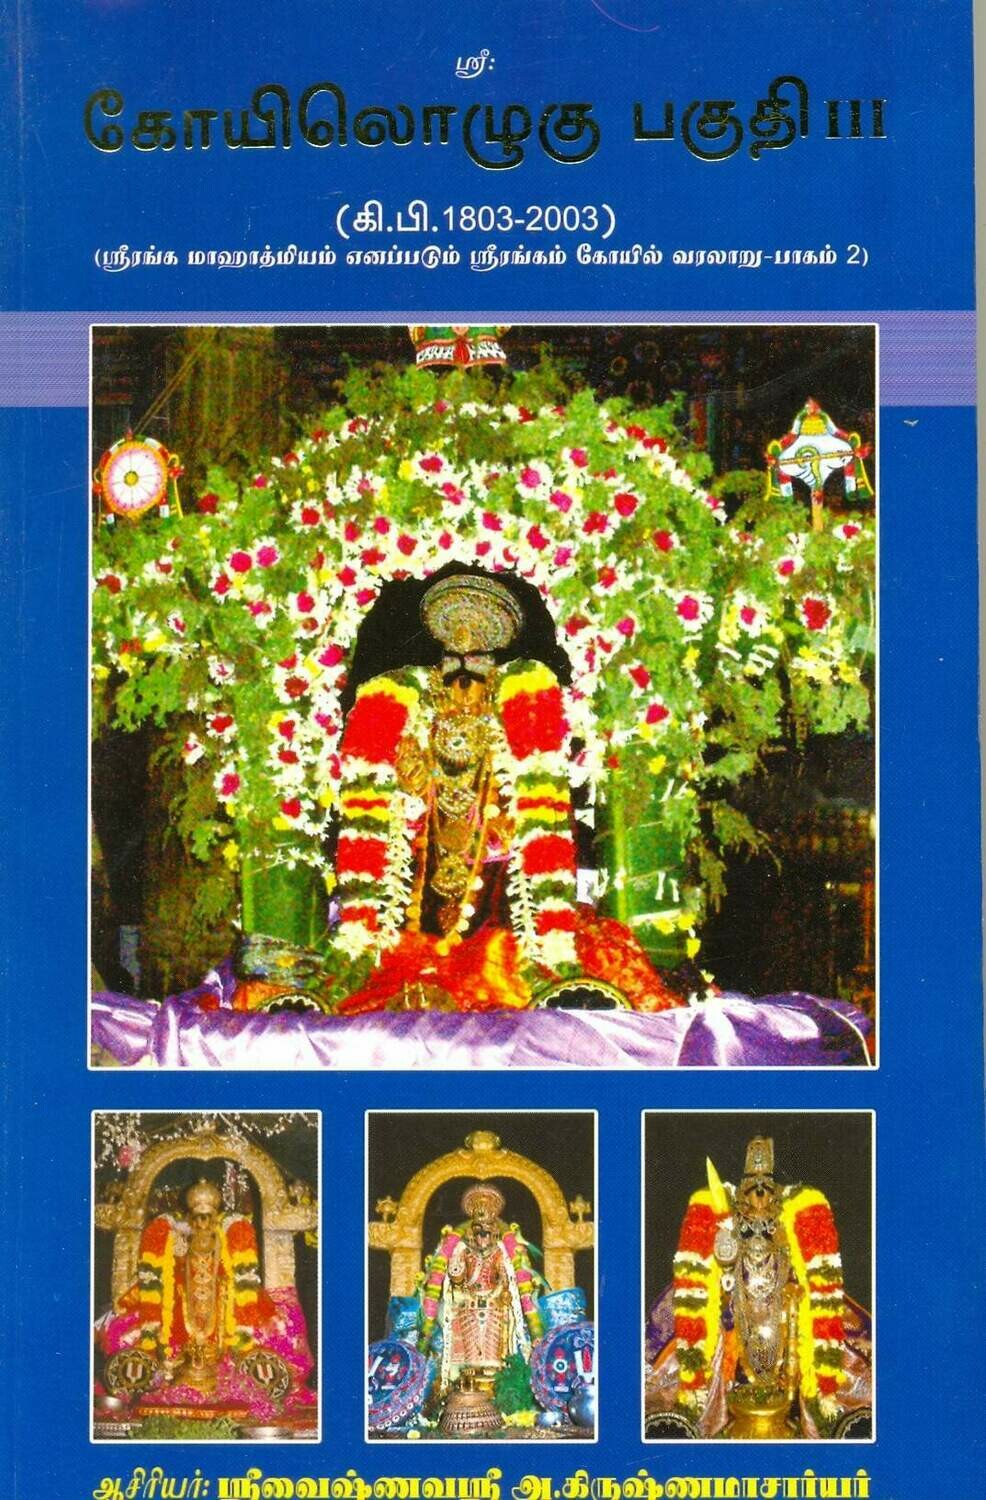 Demy 1/8 size, Printed Book, KO III (Vol 2) - Festivals conducted in Srirangam Temple throughout the year. ஸ்ரீரங்கத்தில் ஆண்டு முழுதும் நடைபெறும் திருவிழாக்களைப் பற்றிய நூல்.